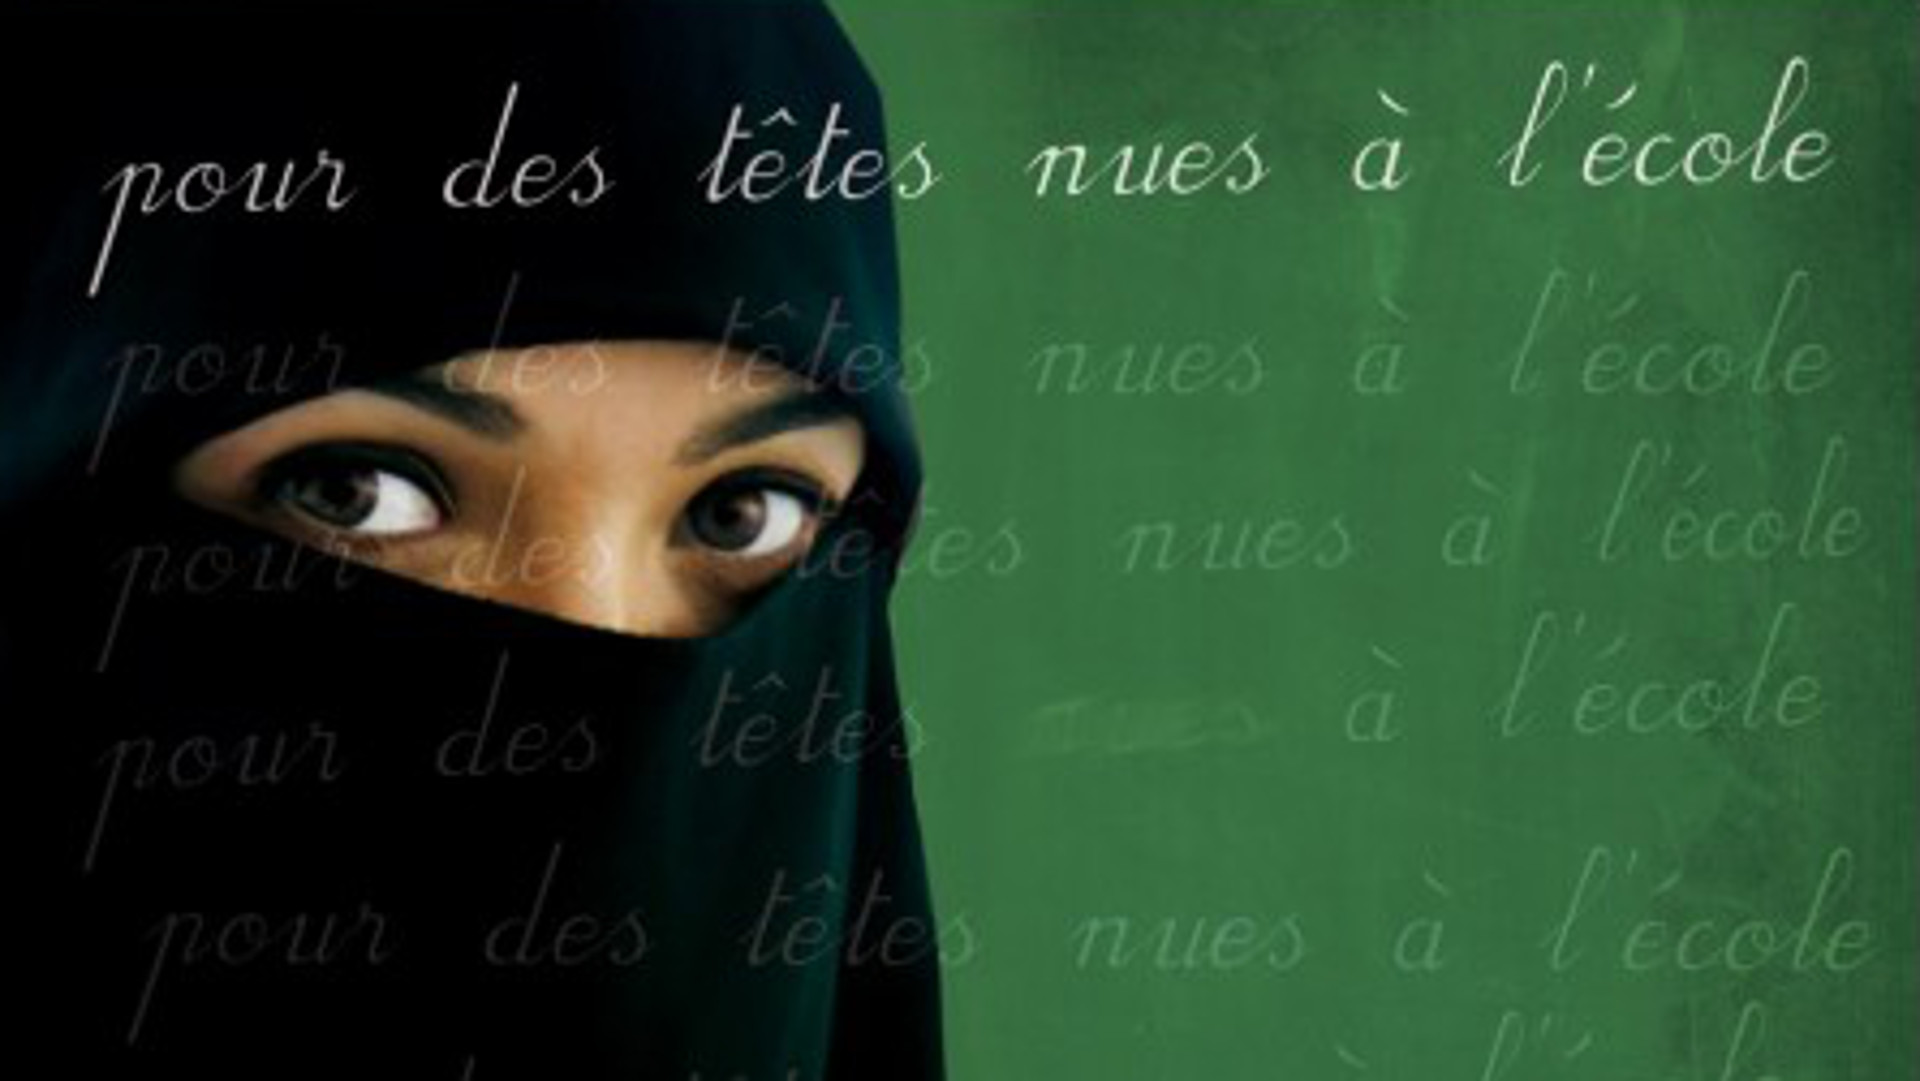 Initiative zum Verbot von Kopfbedeckungen an Walliser Schulen (Plakat-Ausschnitt)